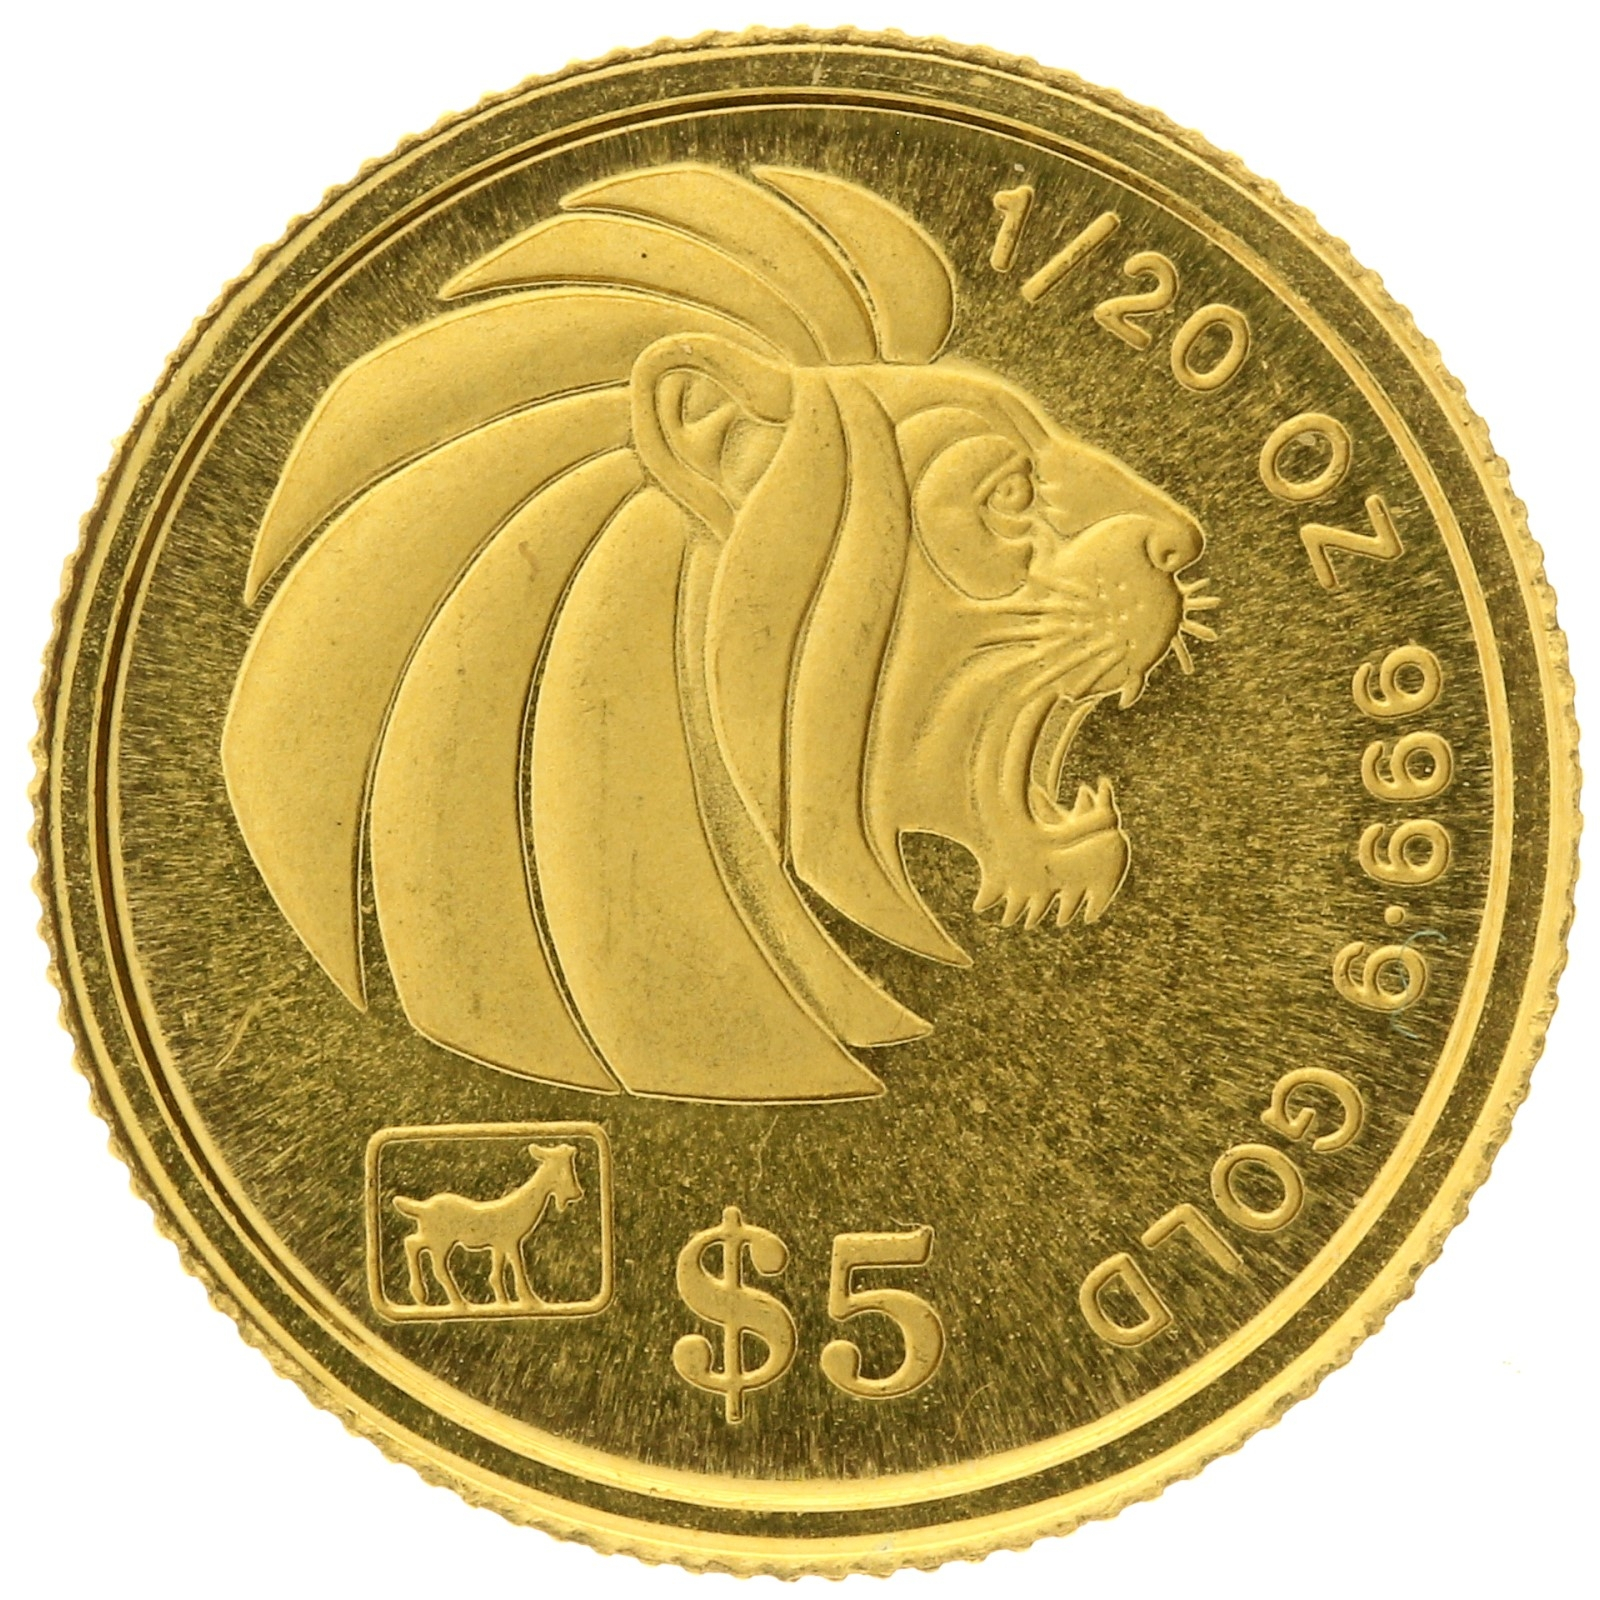 Singapore - 5 dollars - 1991 - Lion - 1/20oz